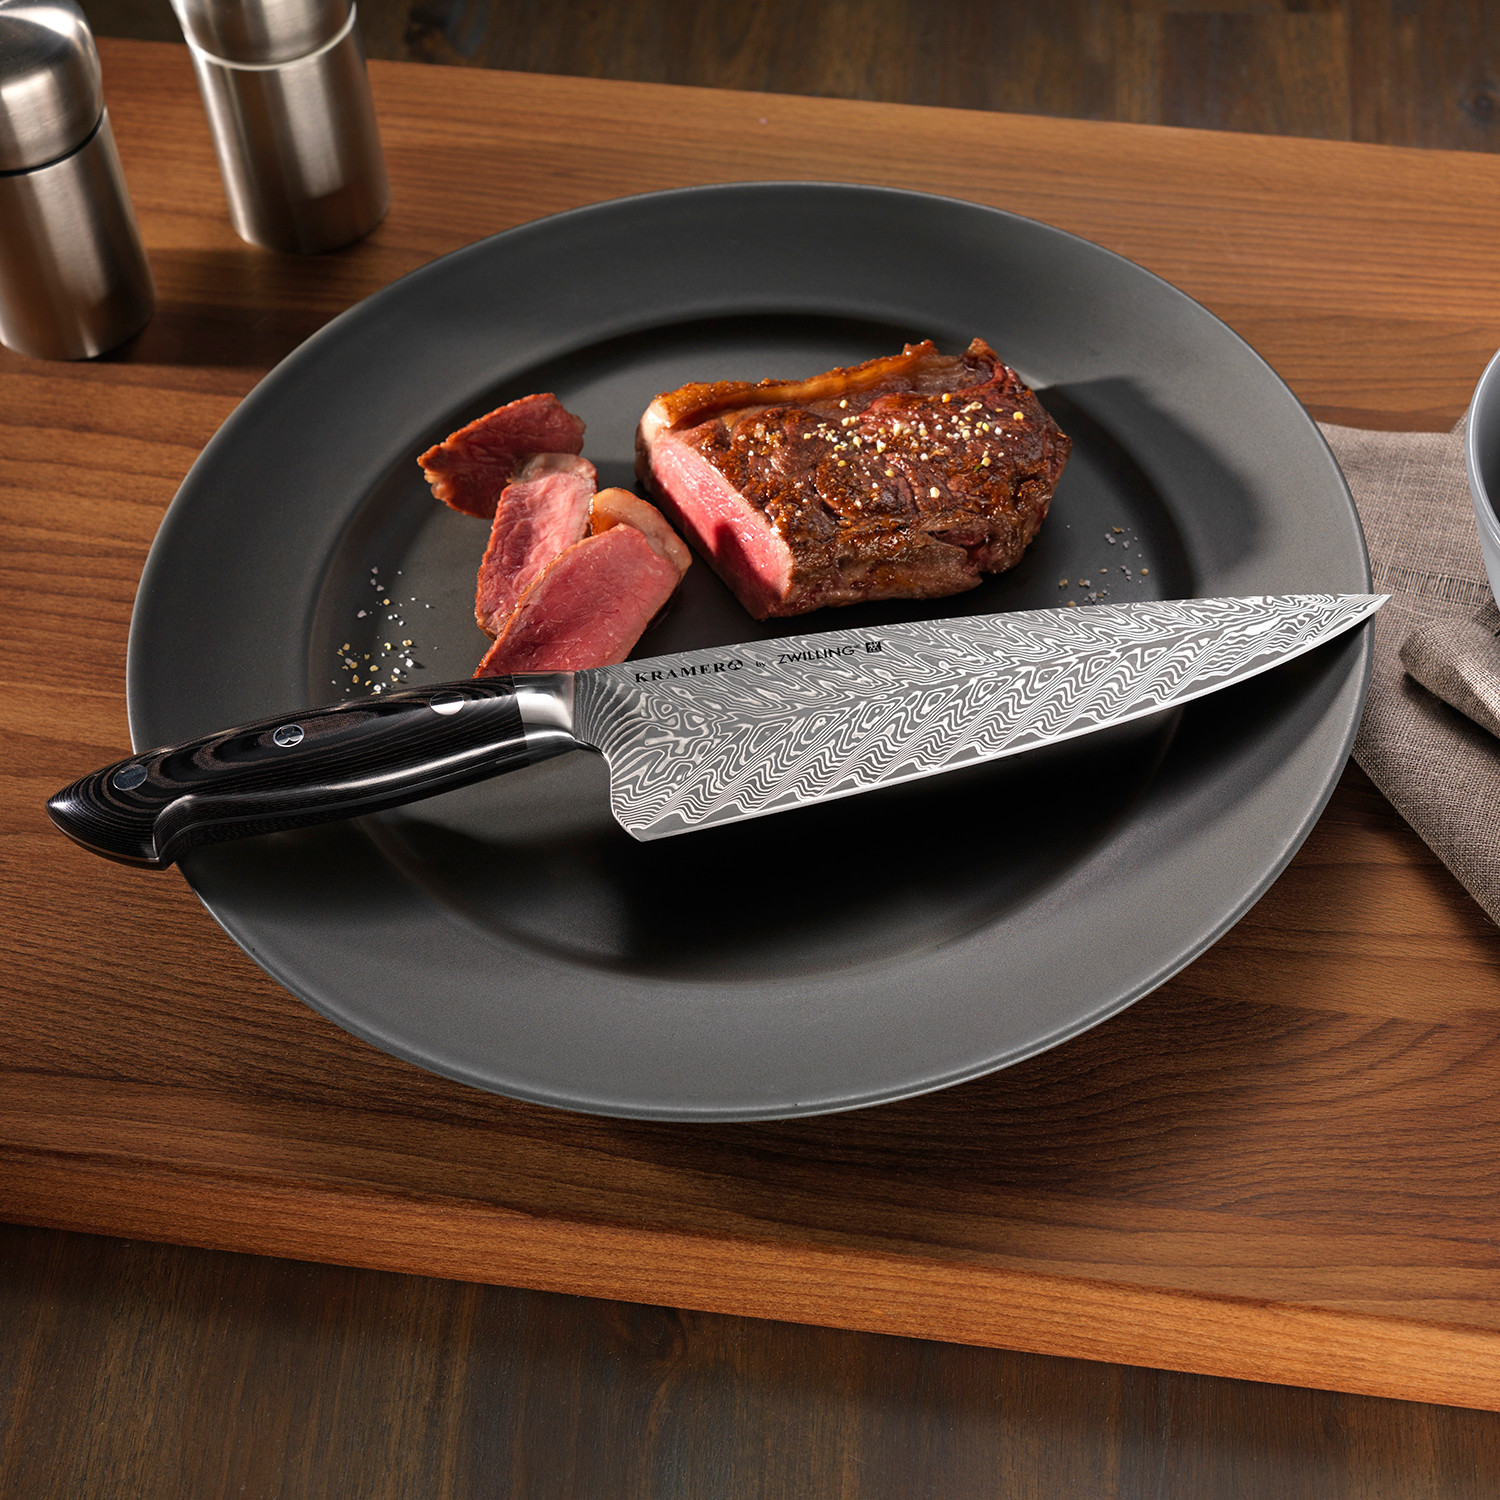 Stainless Damascus Steak Knives by Zwilling J.A. Henckels - Kramer Knives